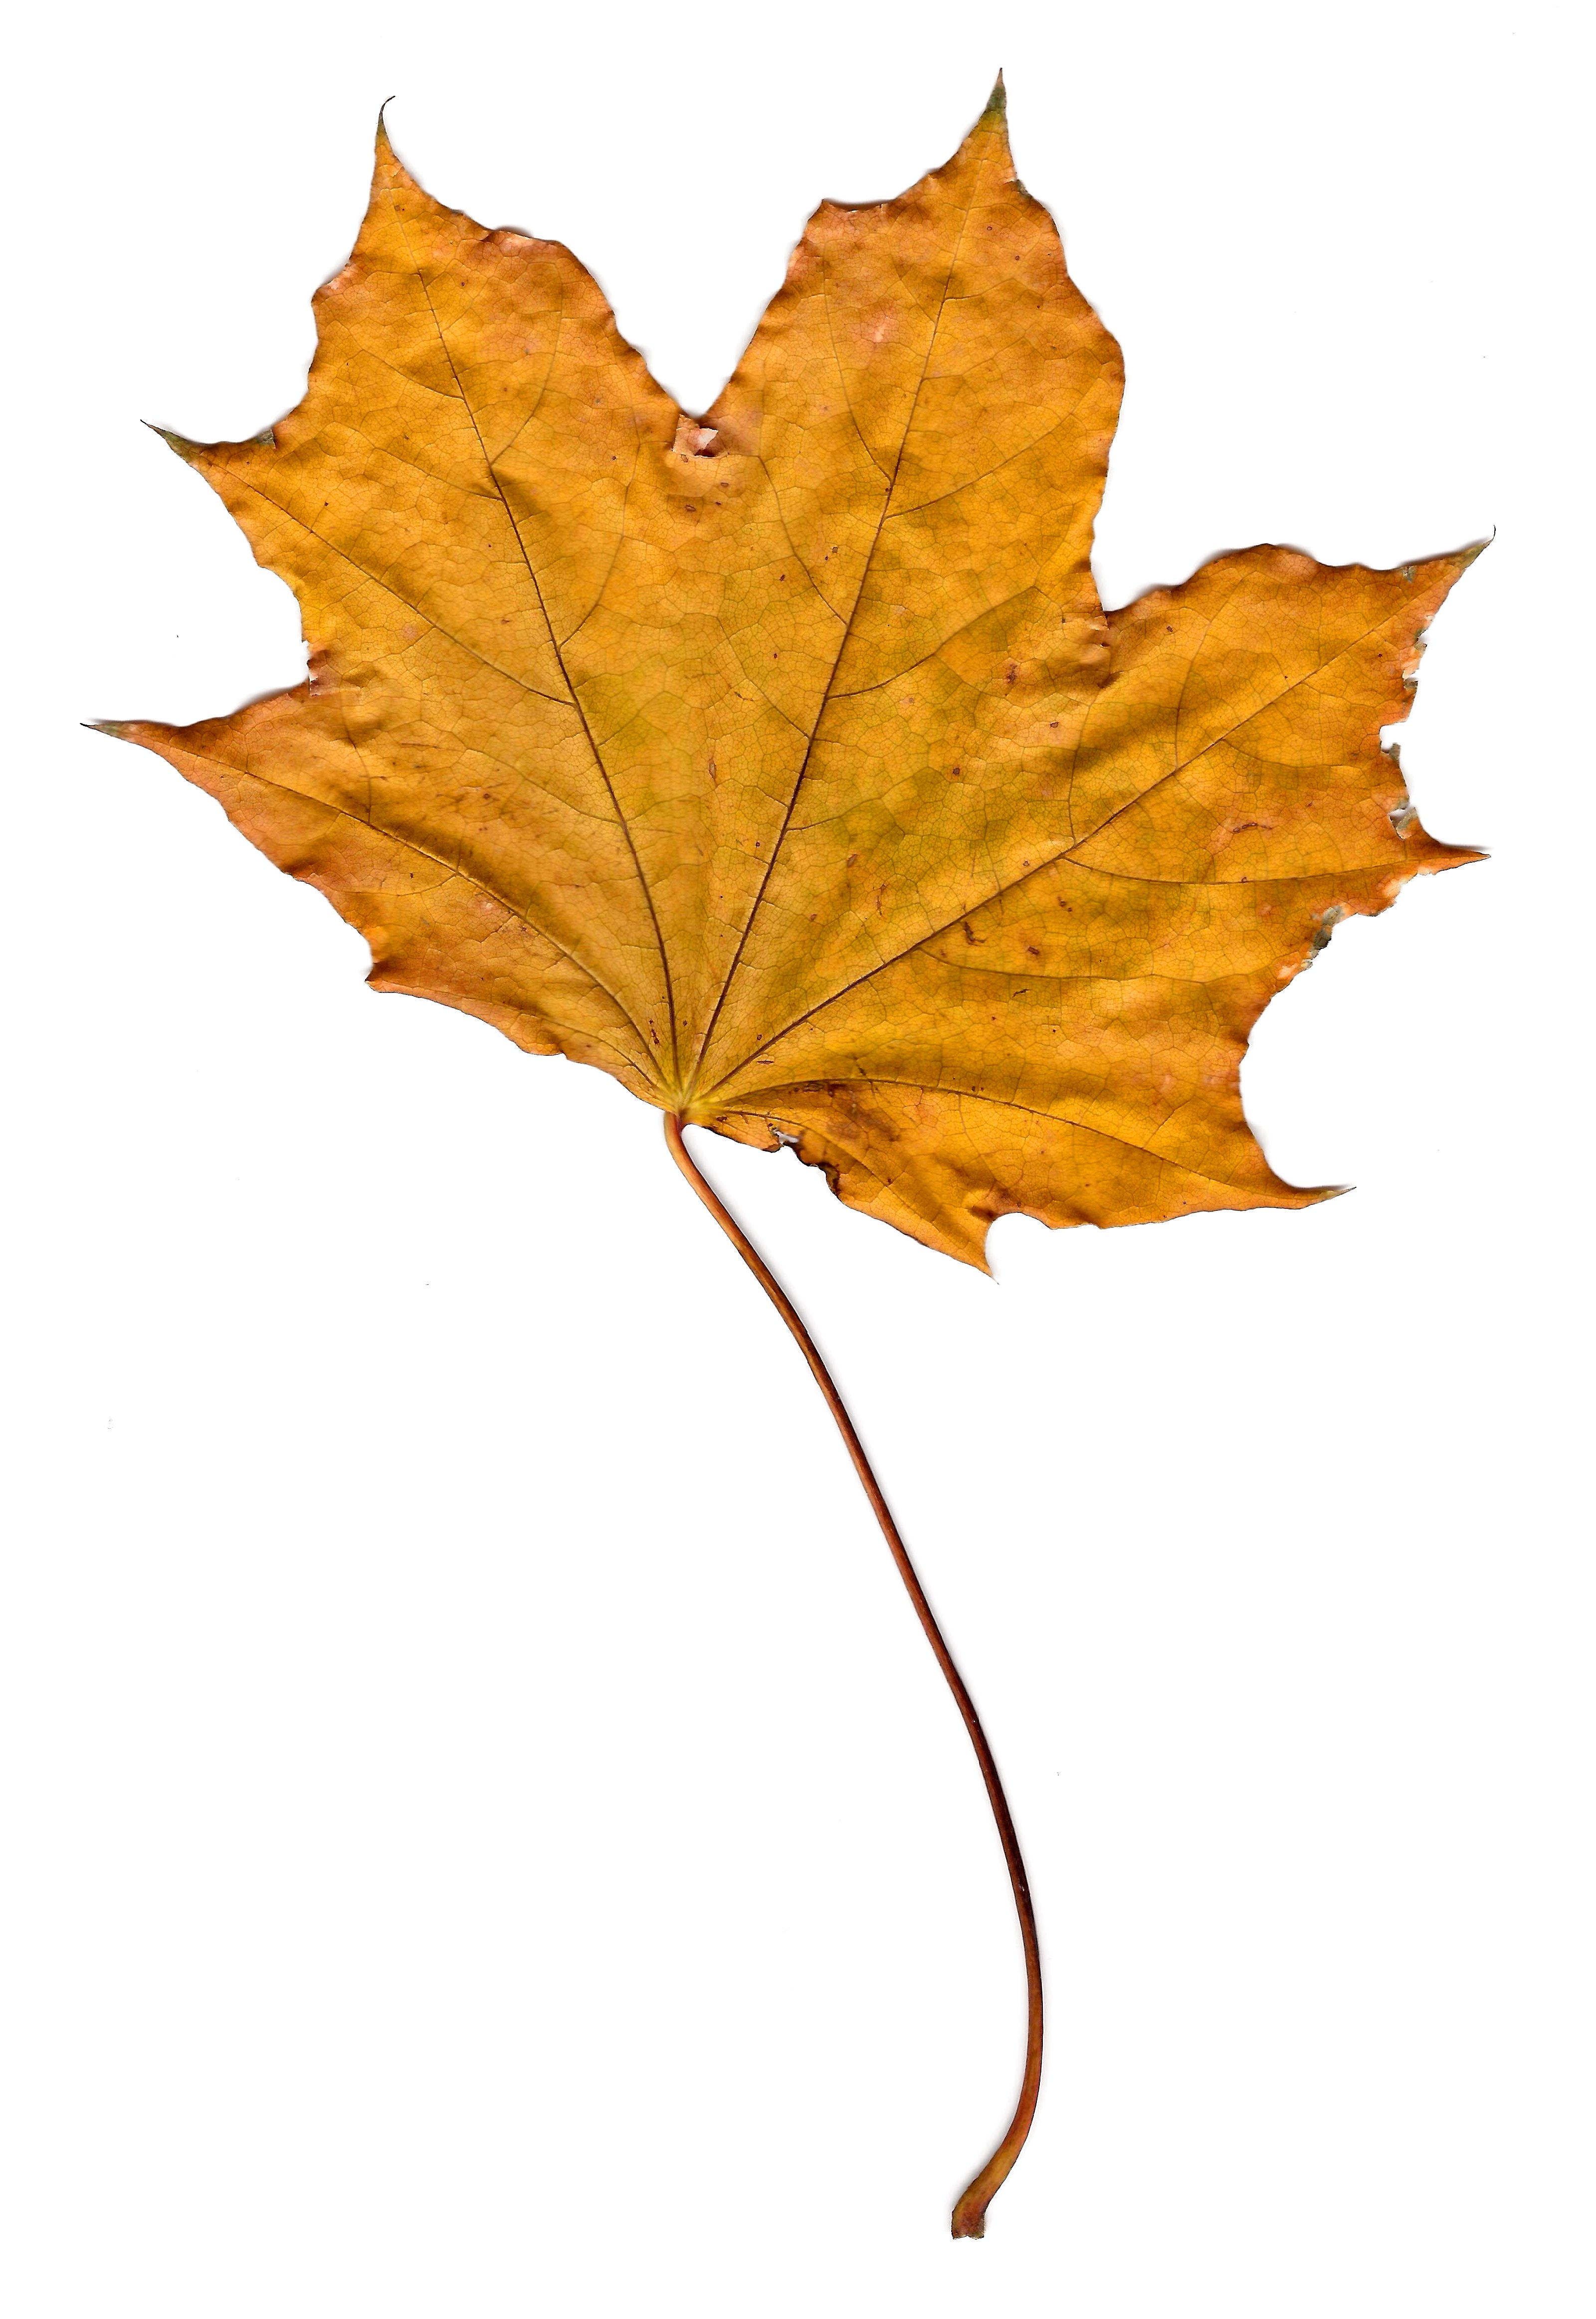 Golden Fall Maple Leaf Picture | Free Photograph | Photos Public Domain